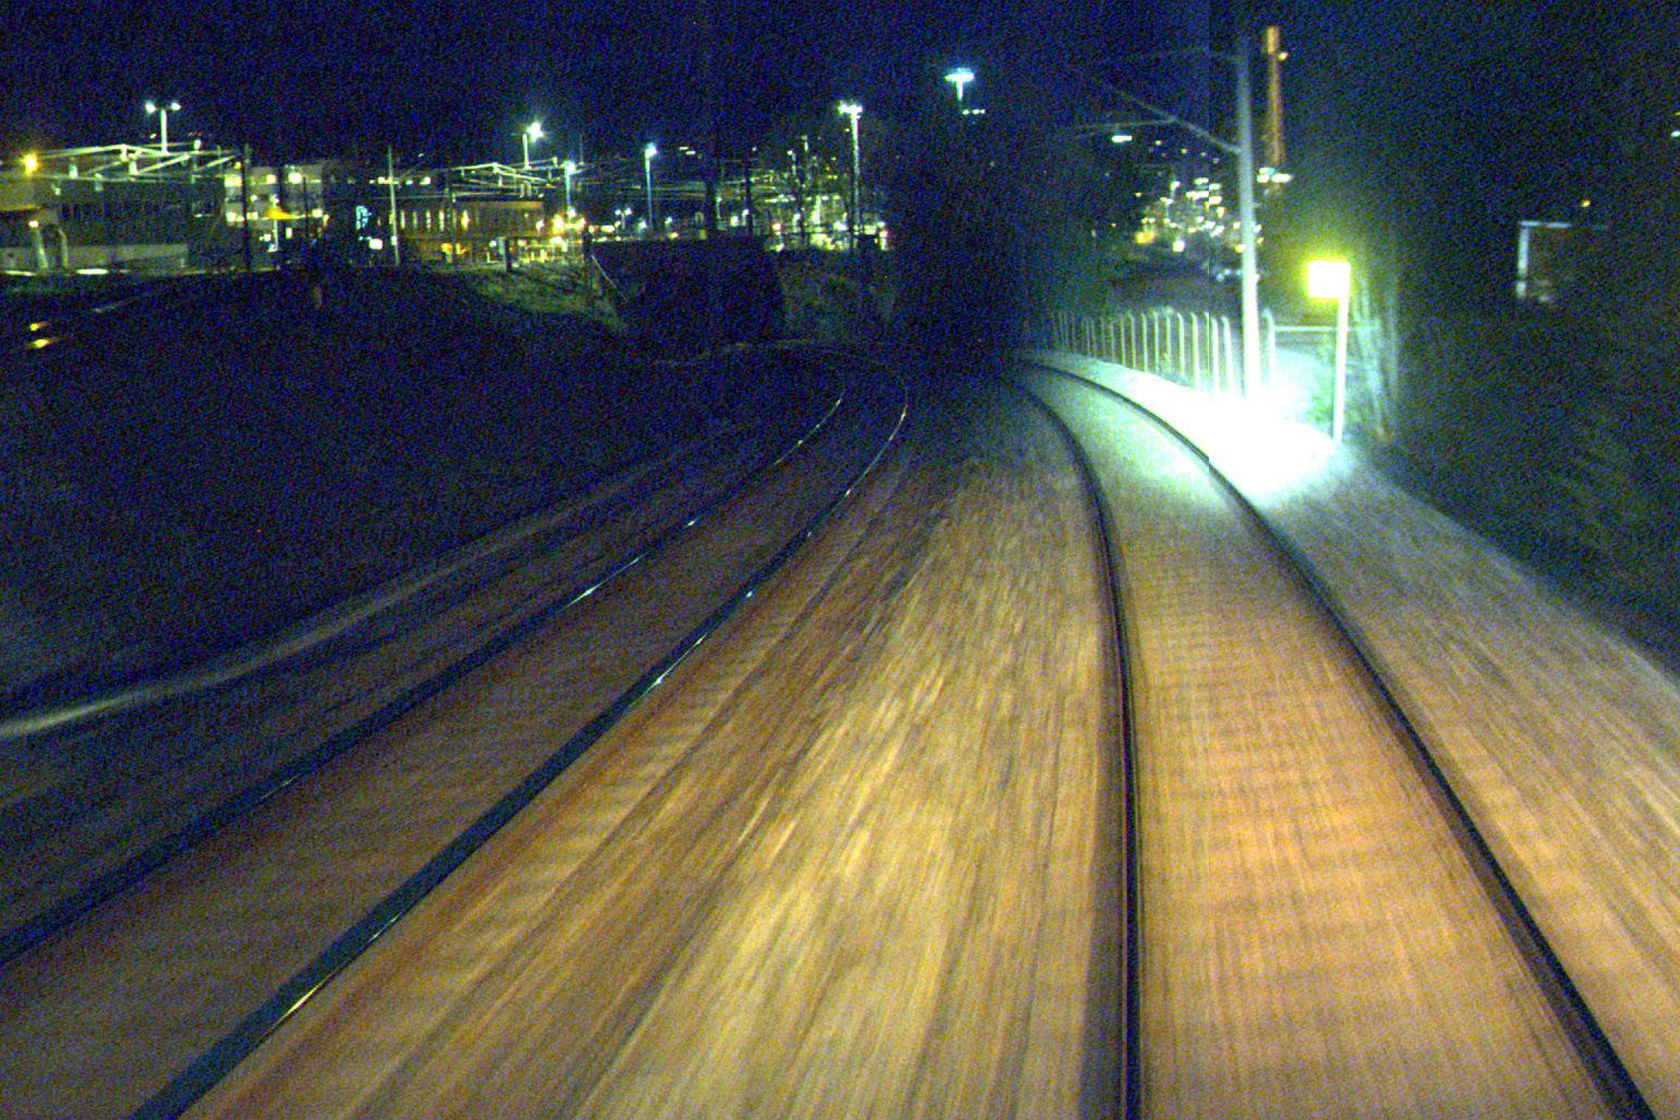 Tracks at Brobekk station